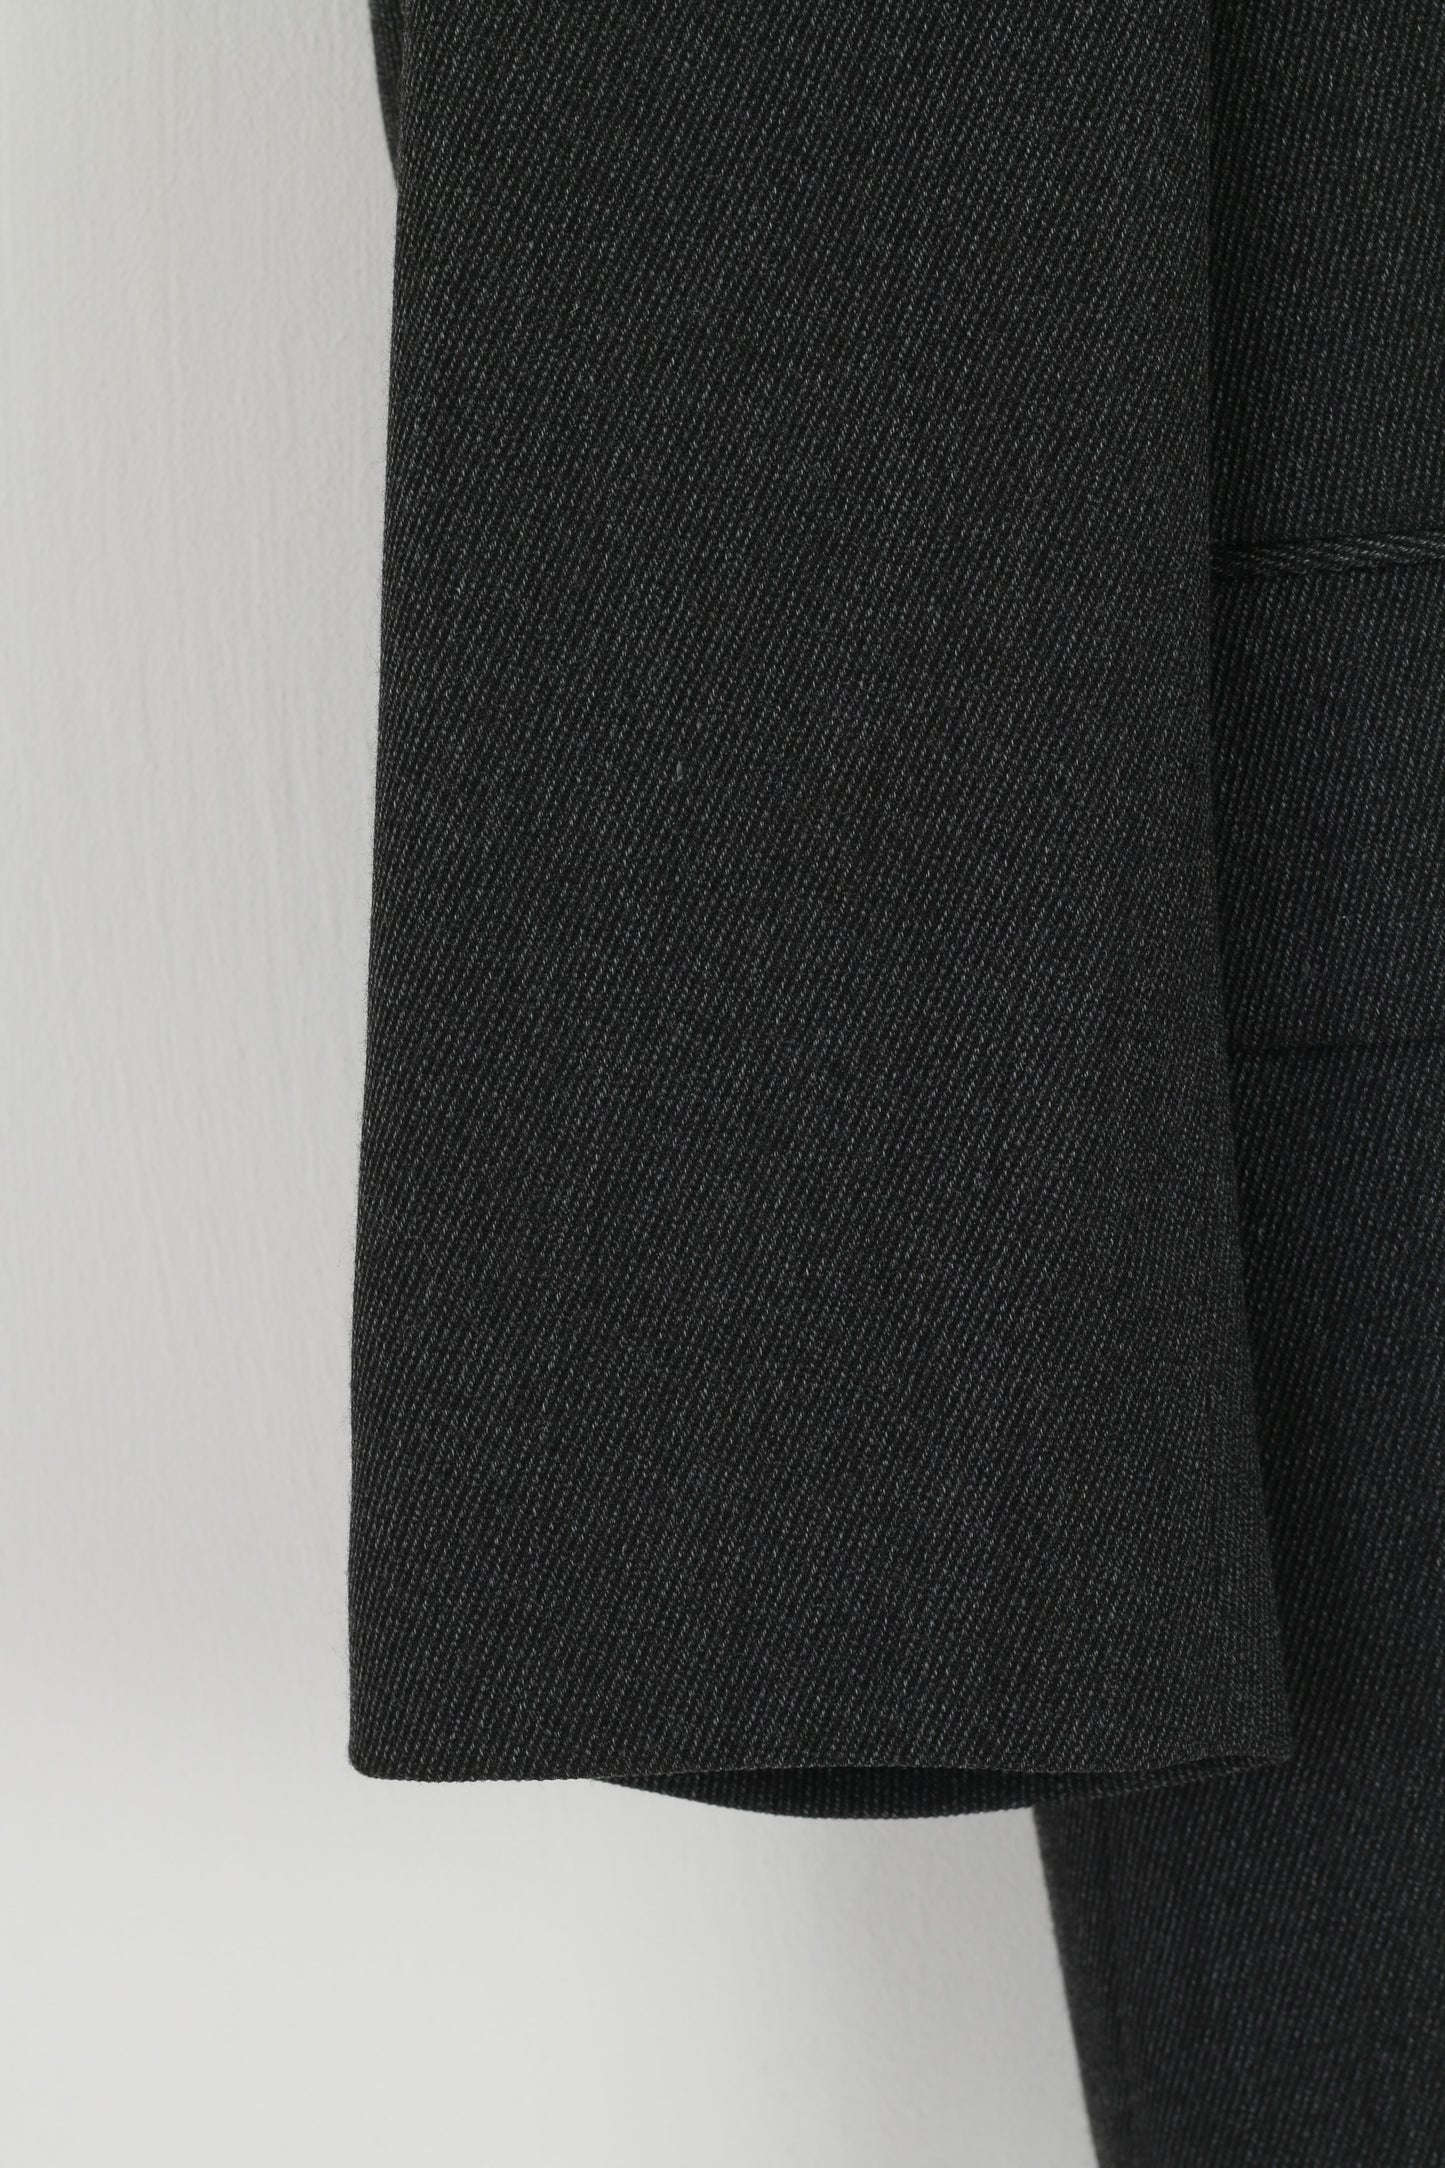 Sunset Suits Giacomo Men 104 40 Blazer Grey Wool Blend Single Breasted Jacket